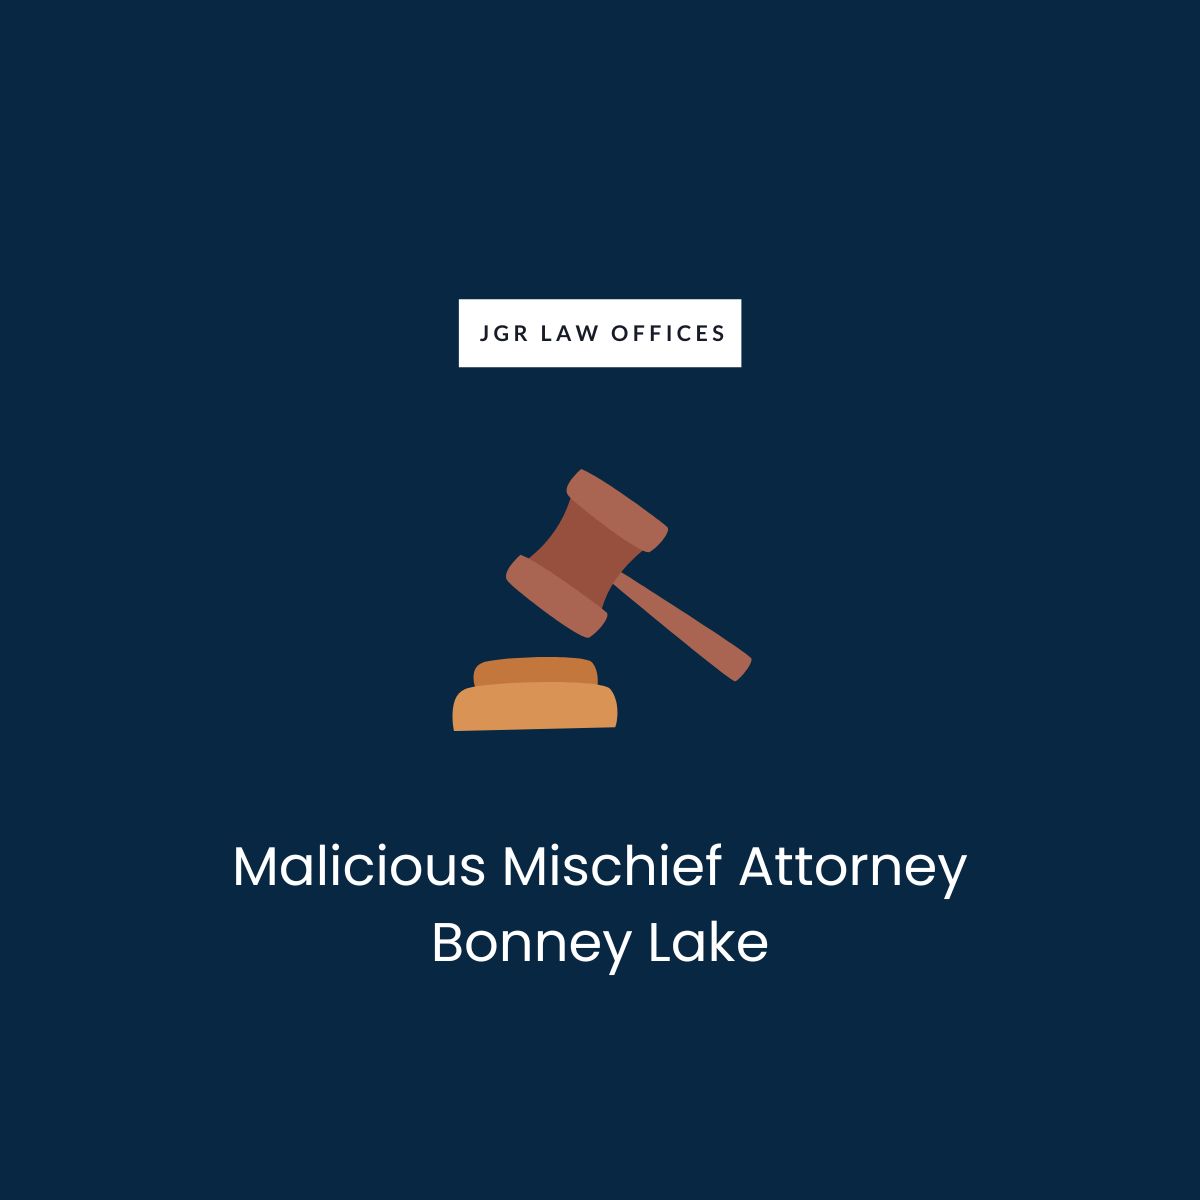 Malicious Mischief Attorney Bonney Lake